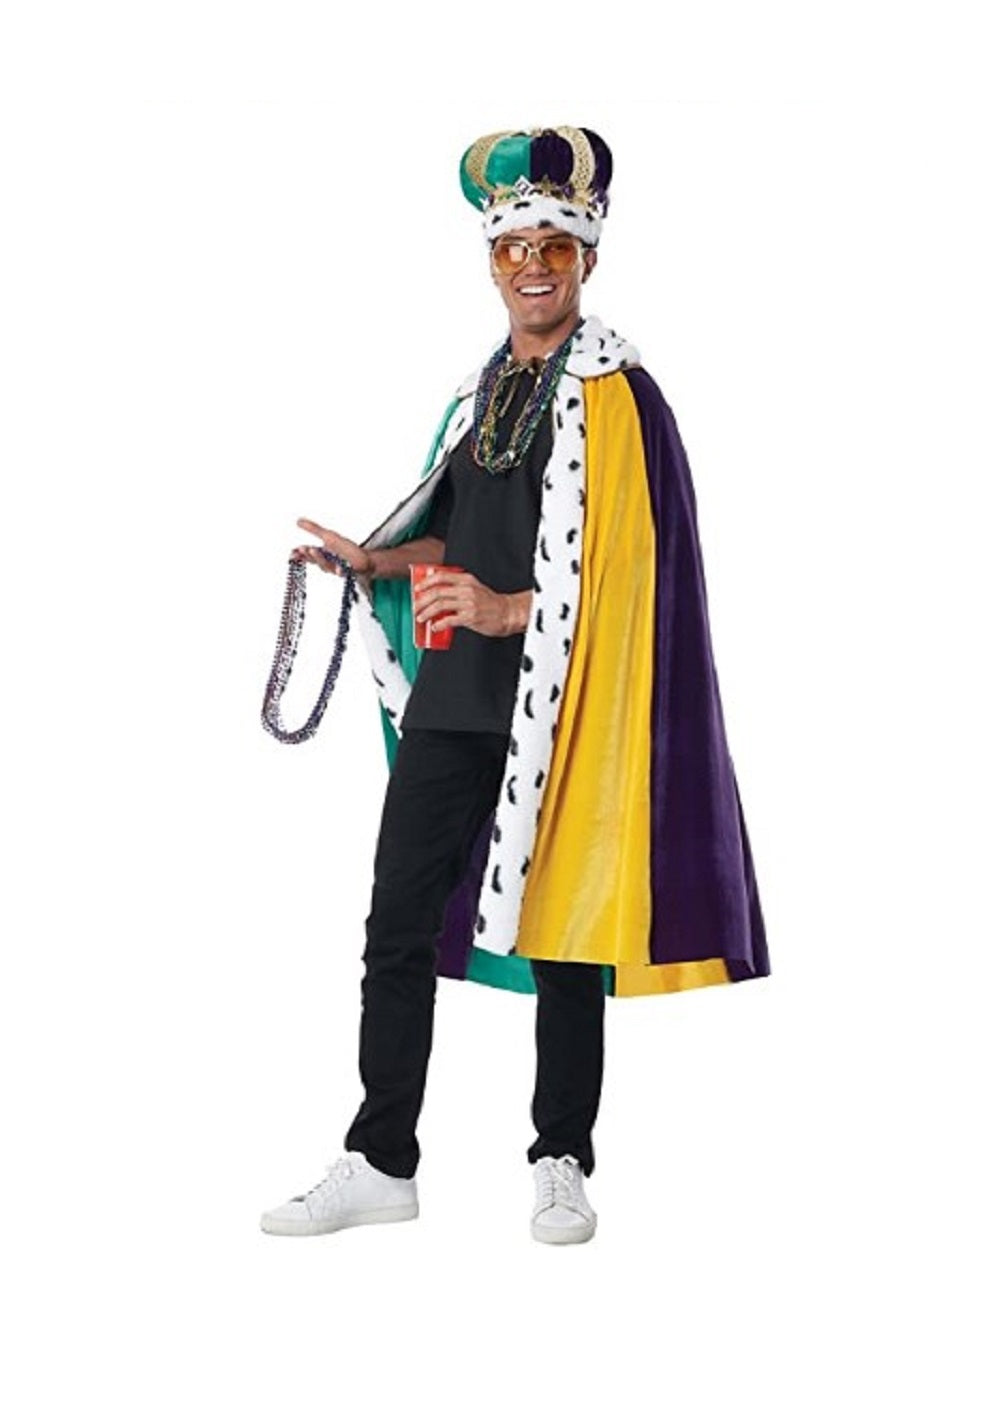 Mardi Gras Cape & Crown - Royal - Unisex - Deluxe Costume Accessory - Adult